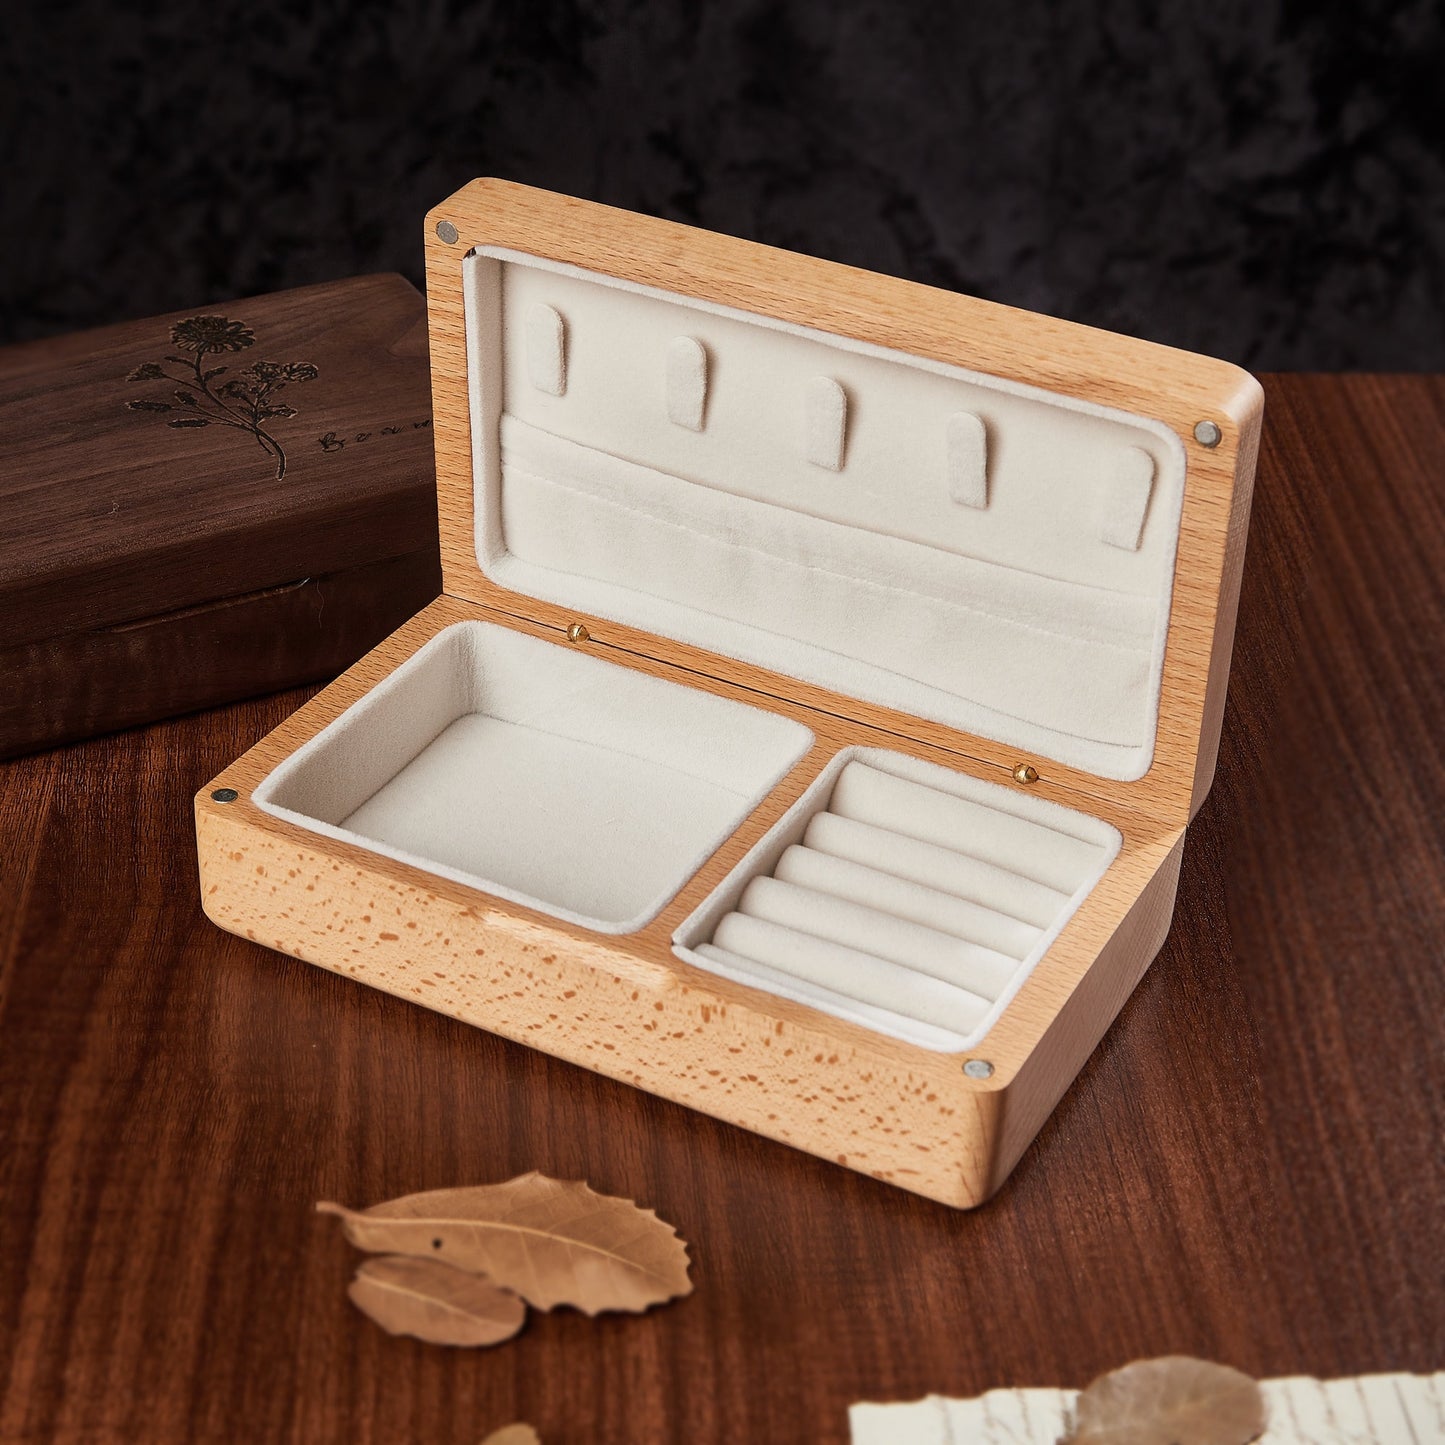 Personalized Wood Jewelry Box